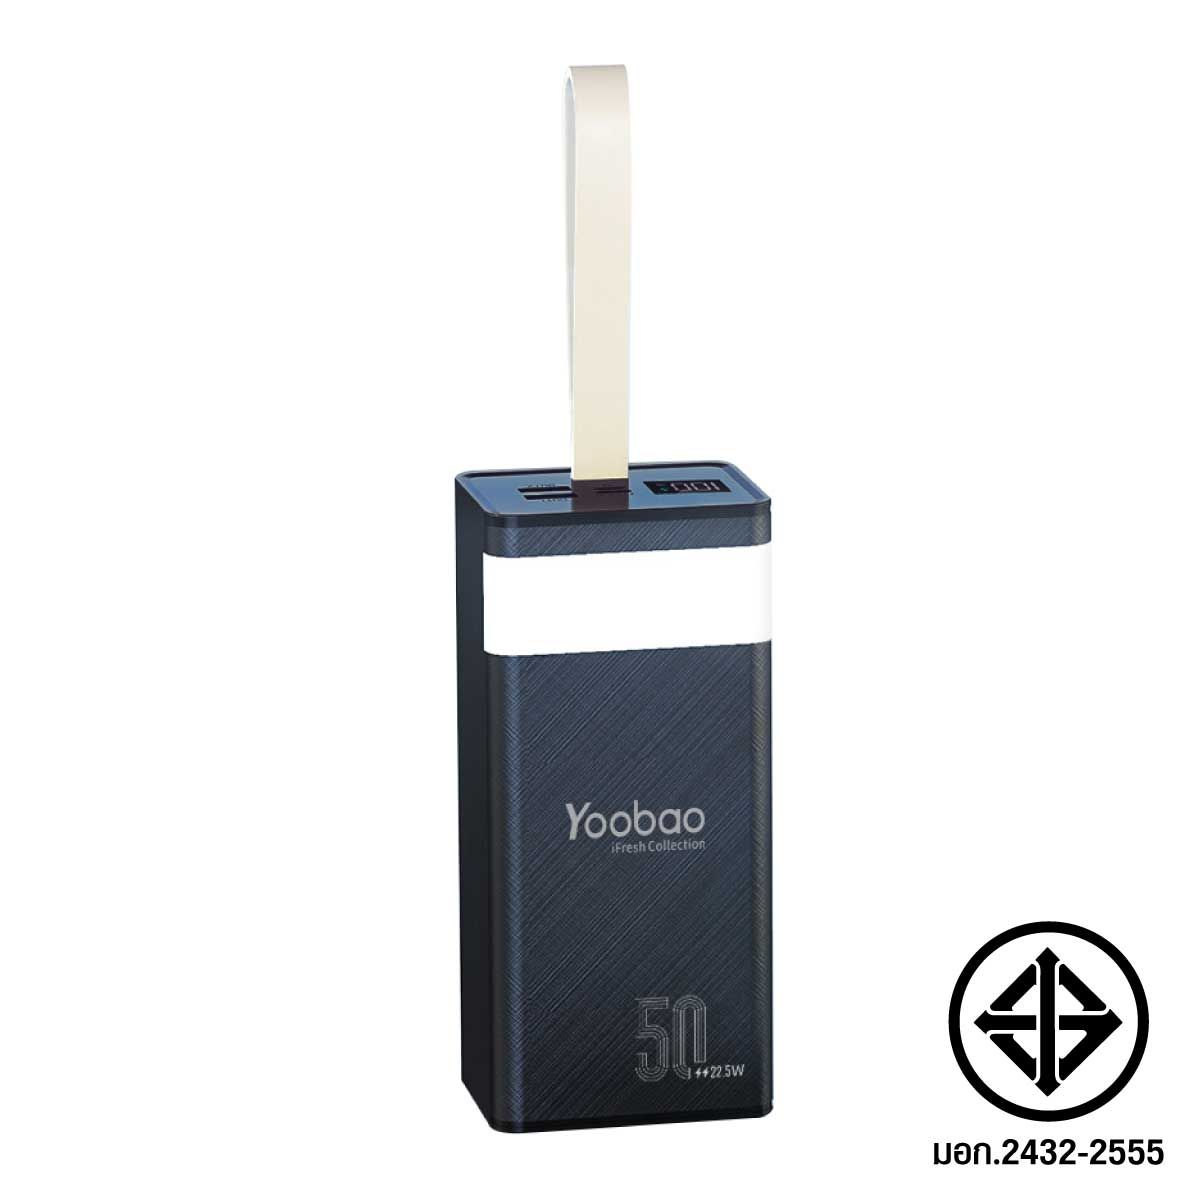 Yoobao H5-V2 Powerbank 50000mAh Fast Charge/QC/PD20W (Black)